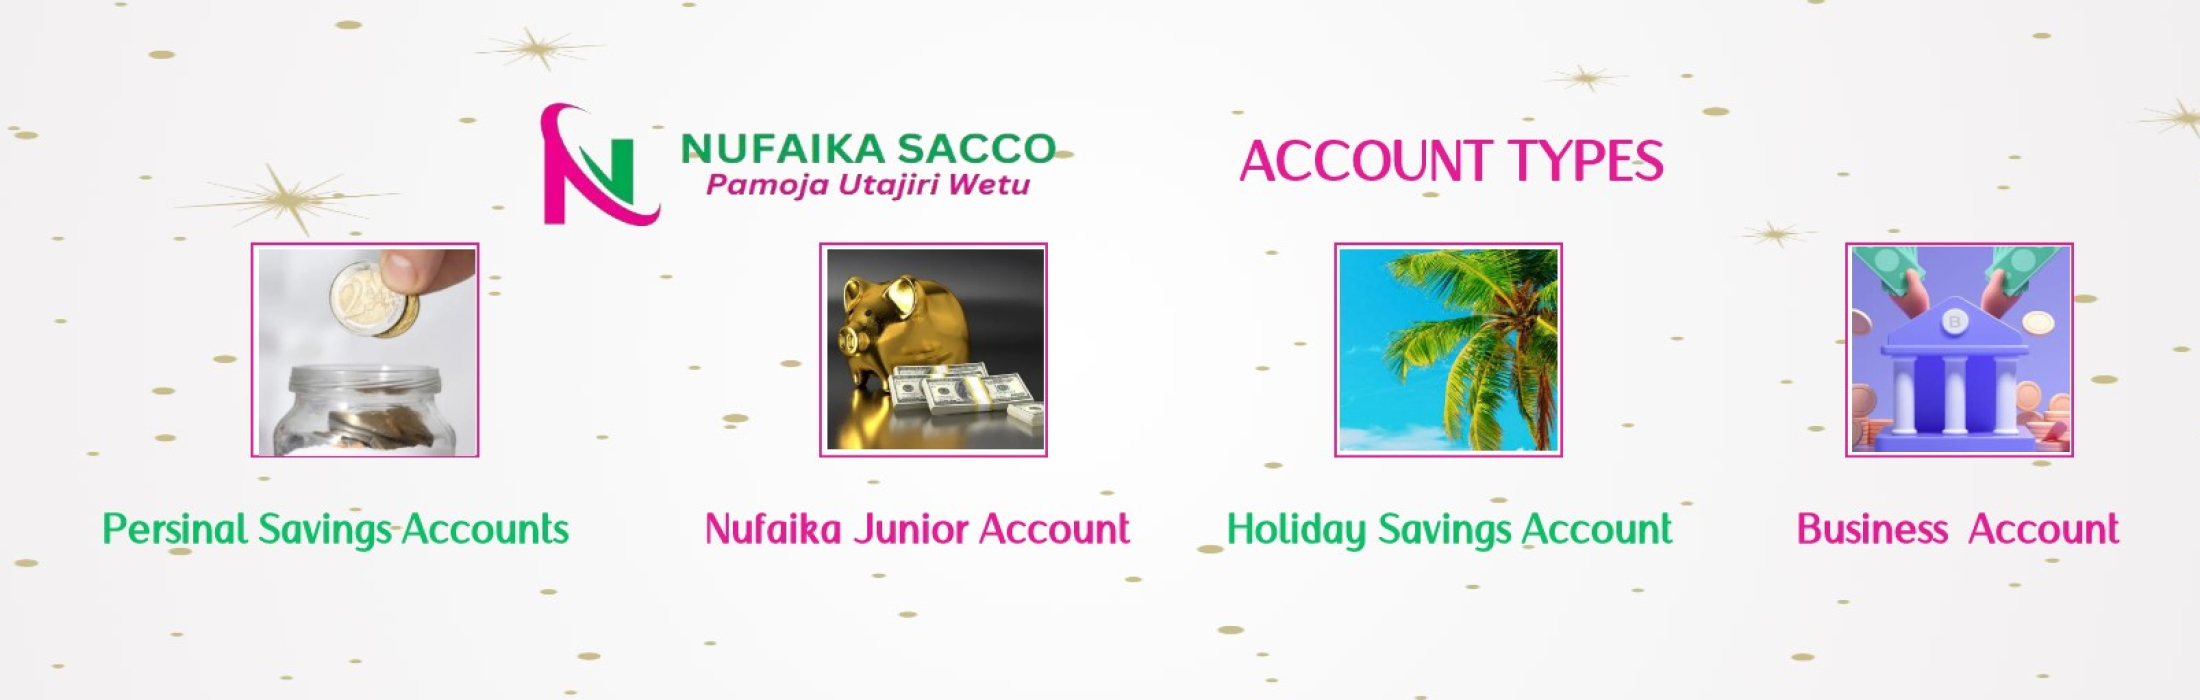 Nufaika Sacco account types